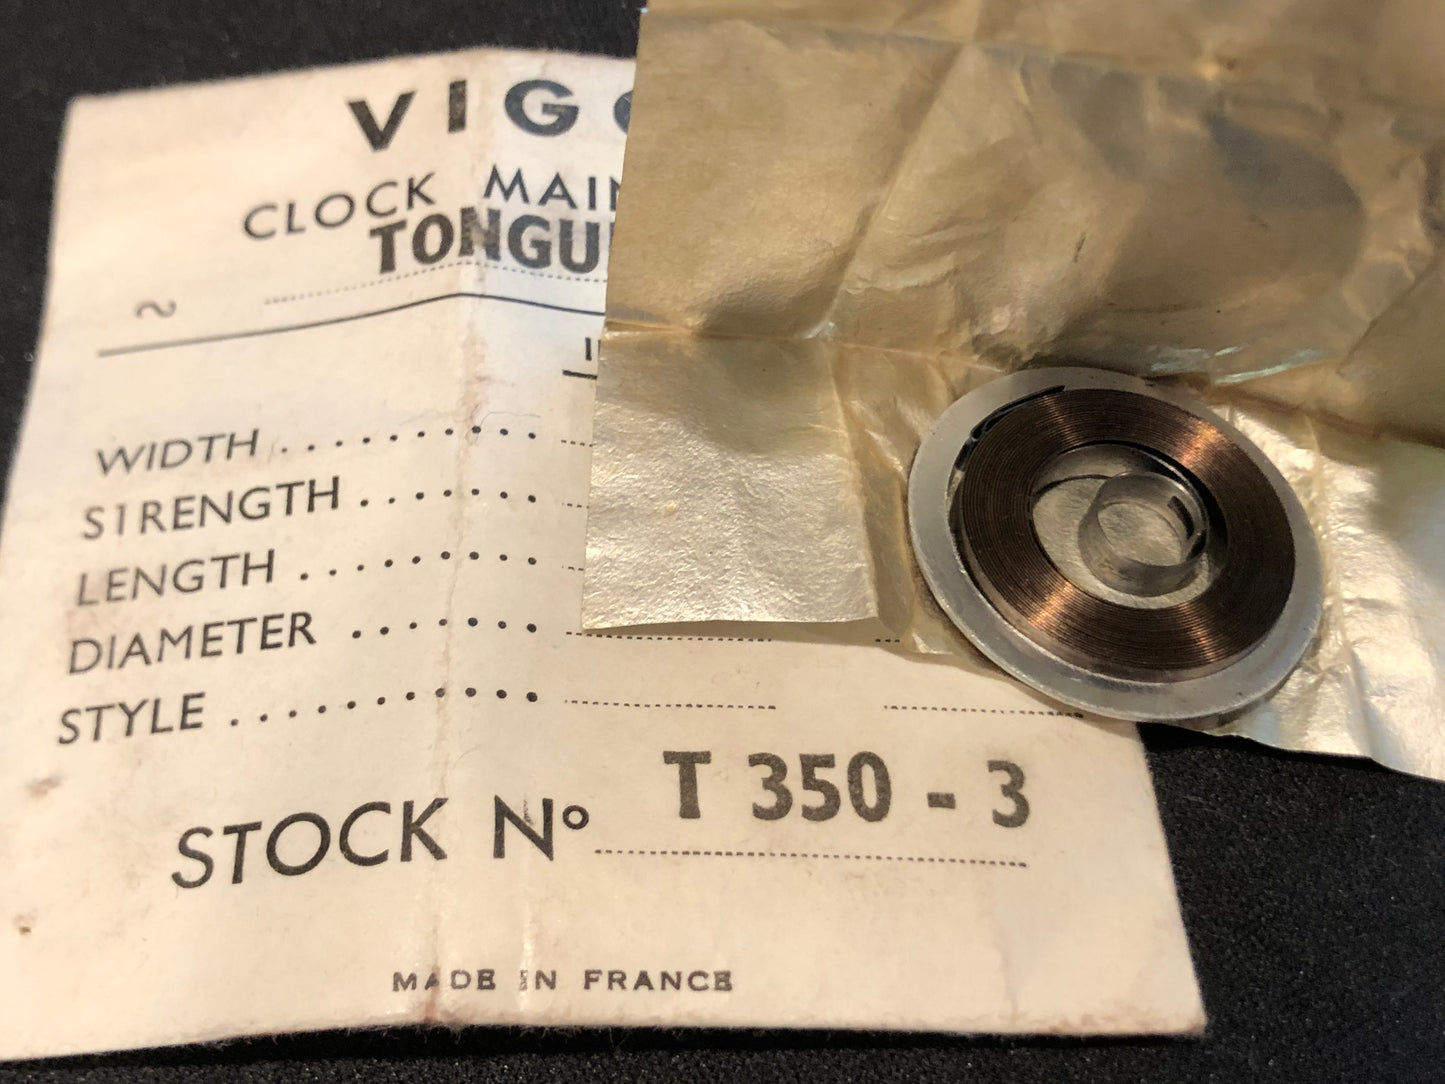 Vigor TONGUE End Clock Mainspring - 26 x 2 x 48" Long - T 350-3